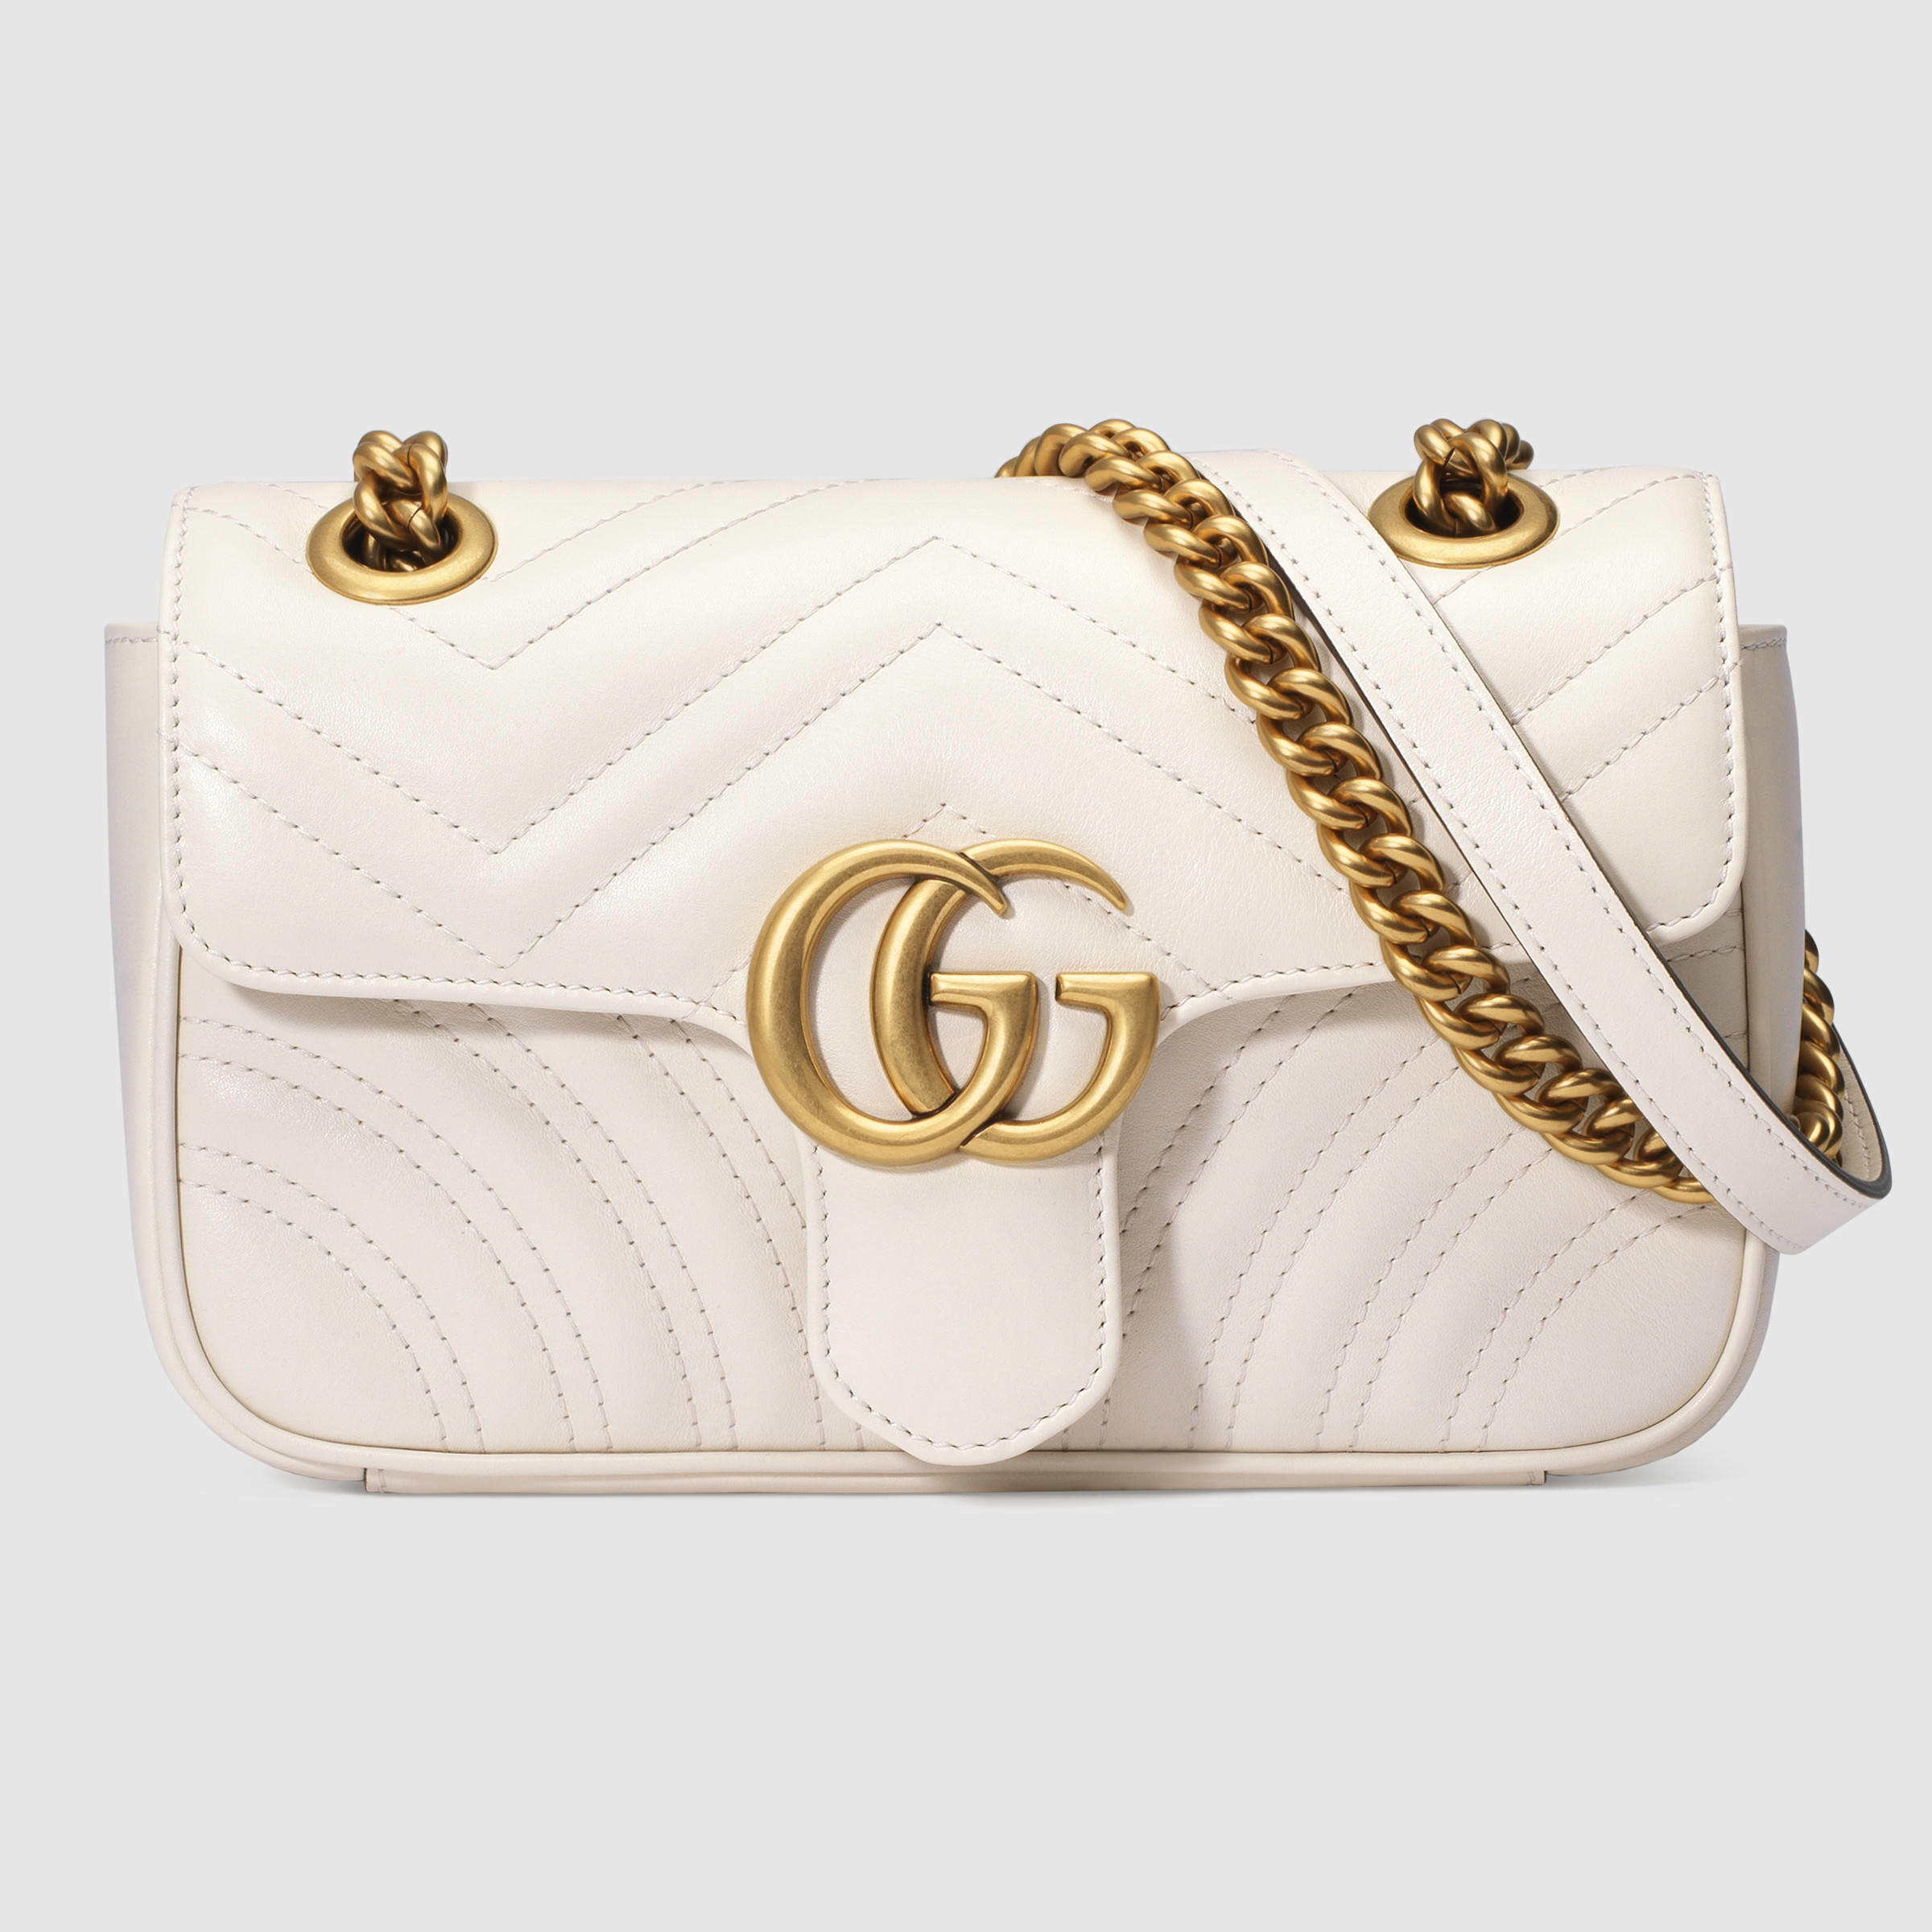 Lyst - Gucci Gg Marmont Matelassã© Shoulder Bag in White